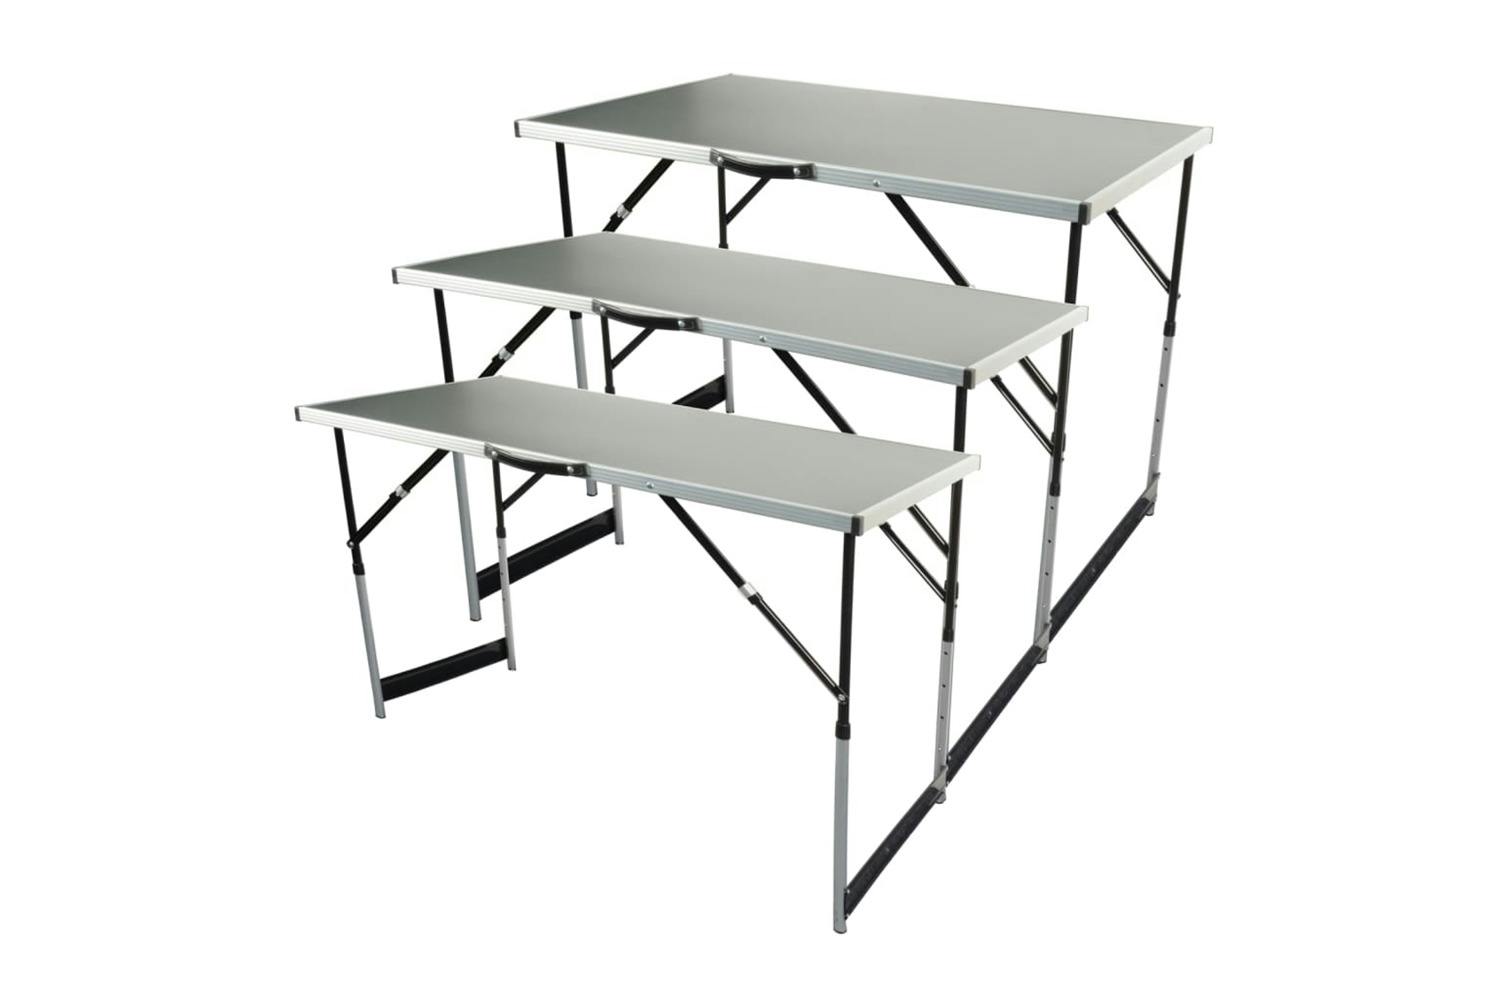 Bruder Mannesmann 443677 Multifunction Folding Table Set Aluminum 3 Pcs